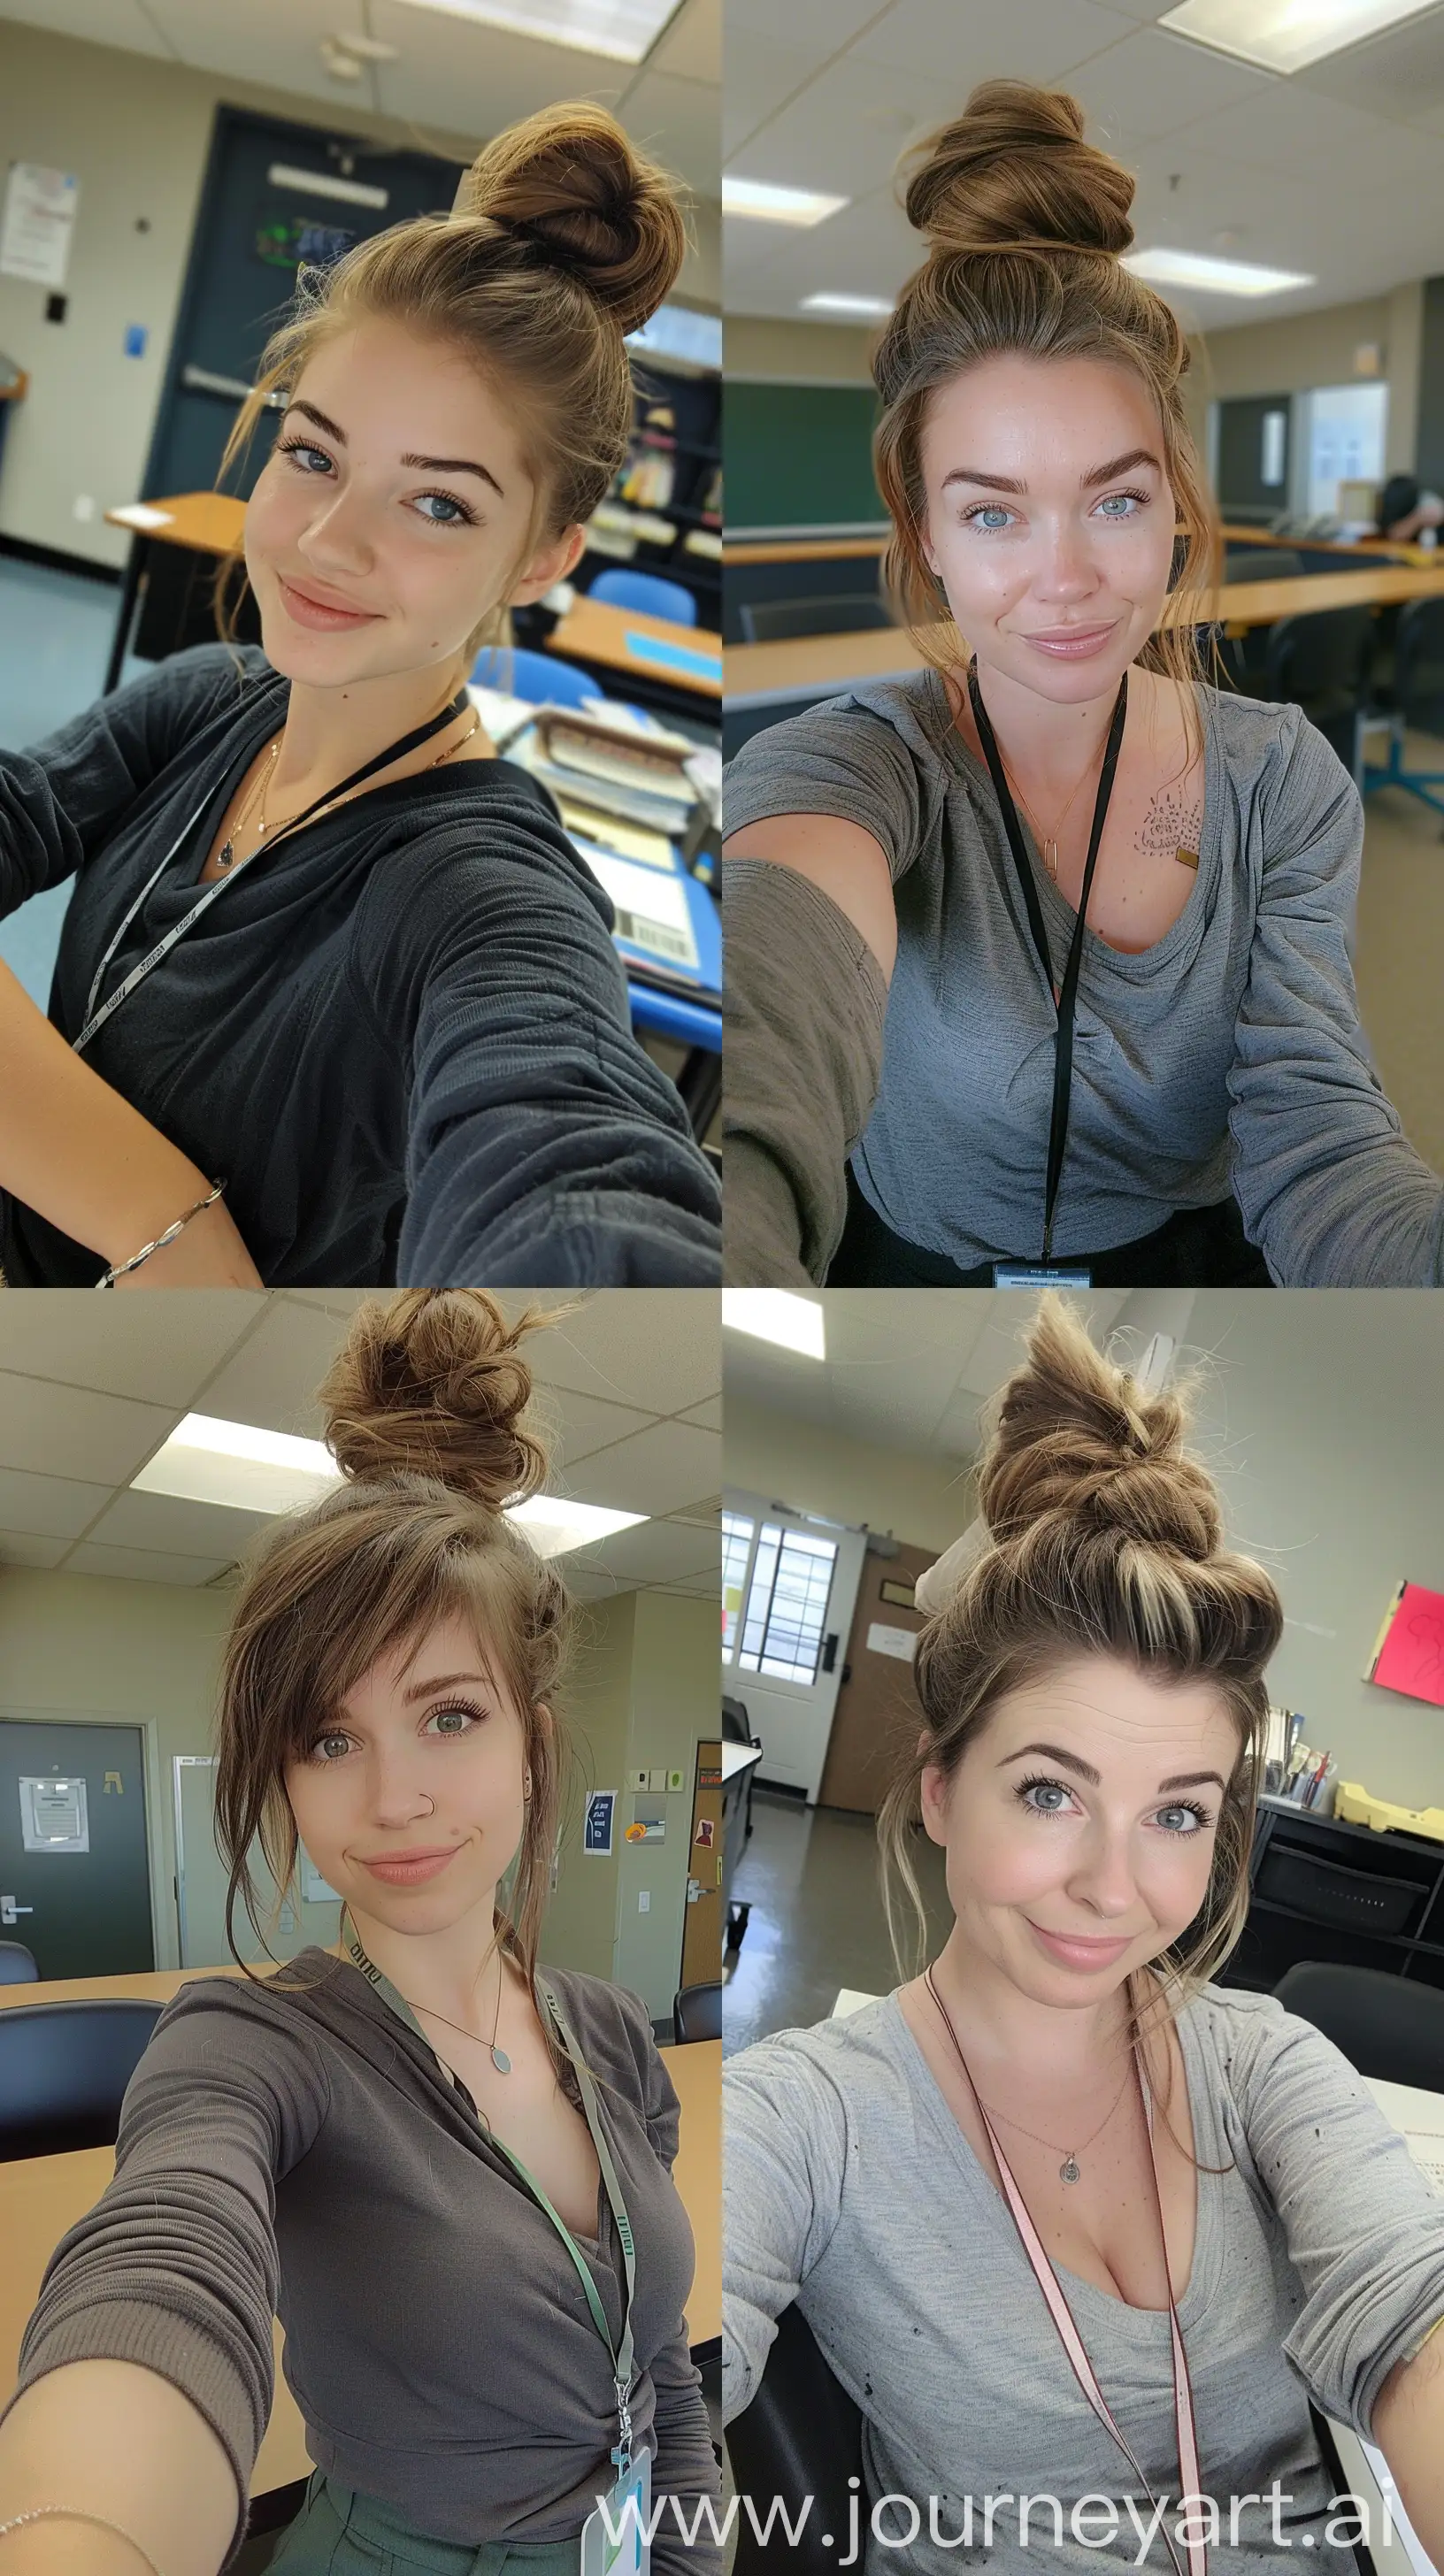 Elementary-School-Teacher-Taking-a-Selfie-at-Her-Desk